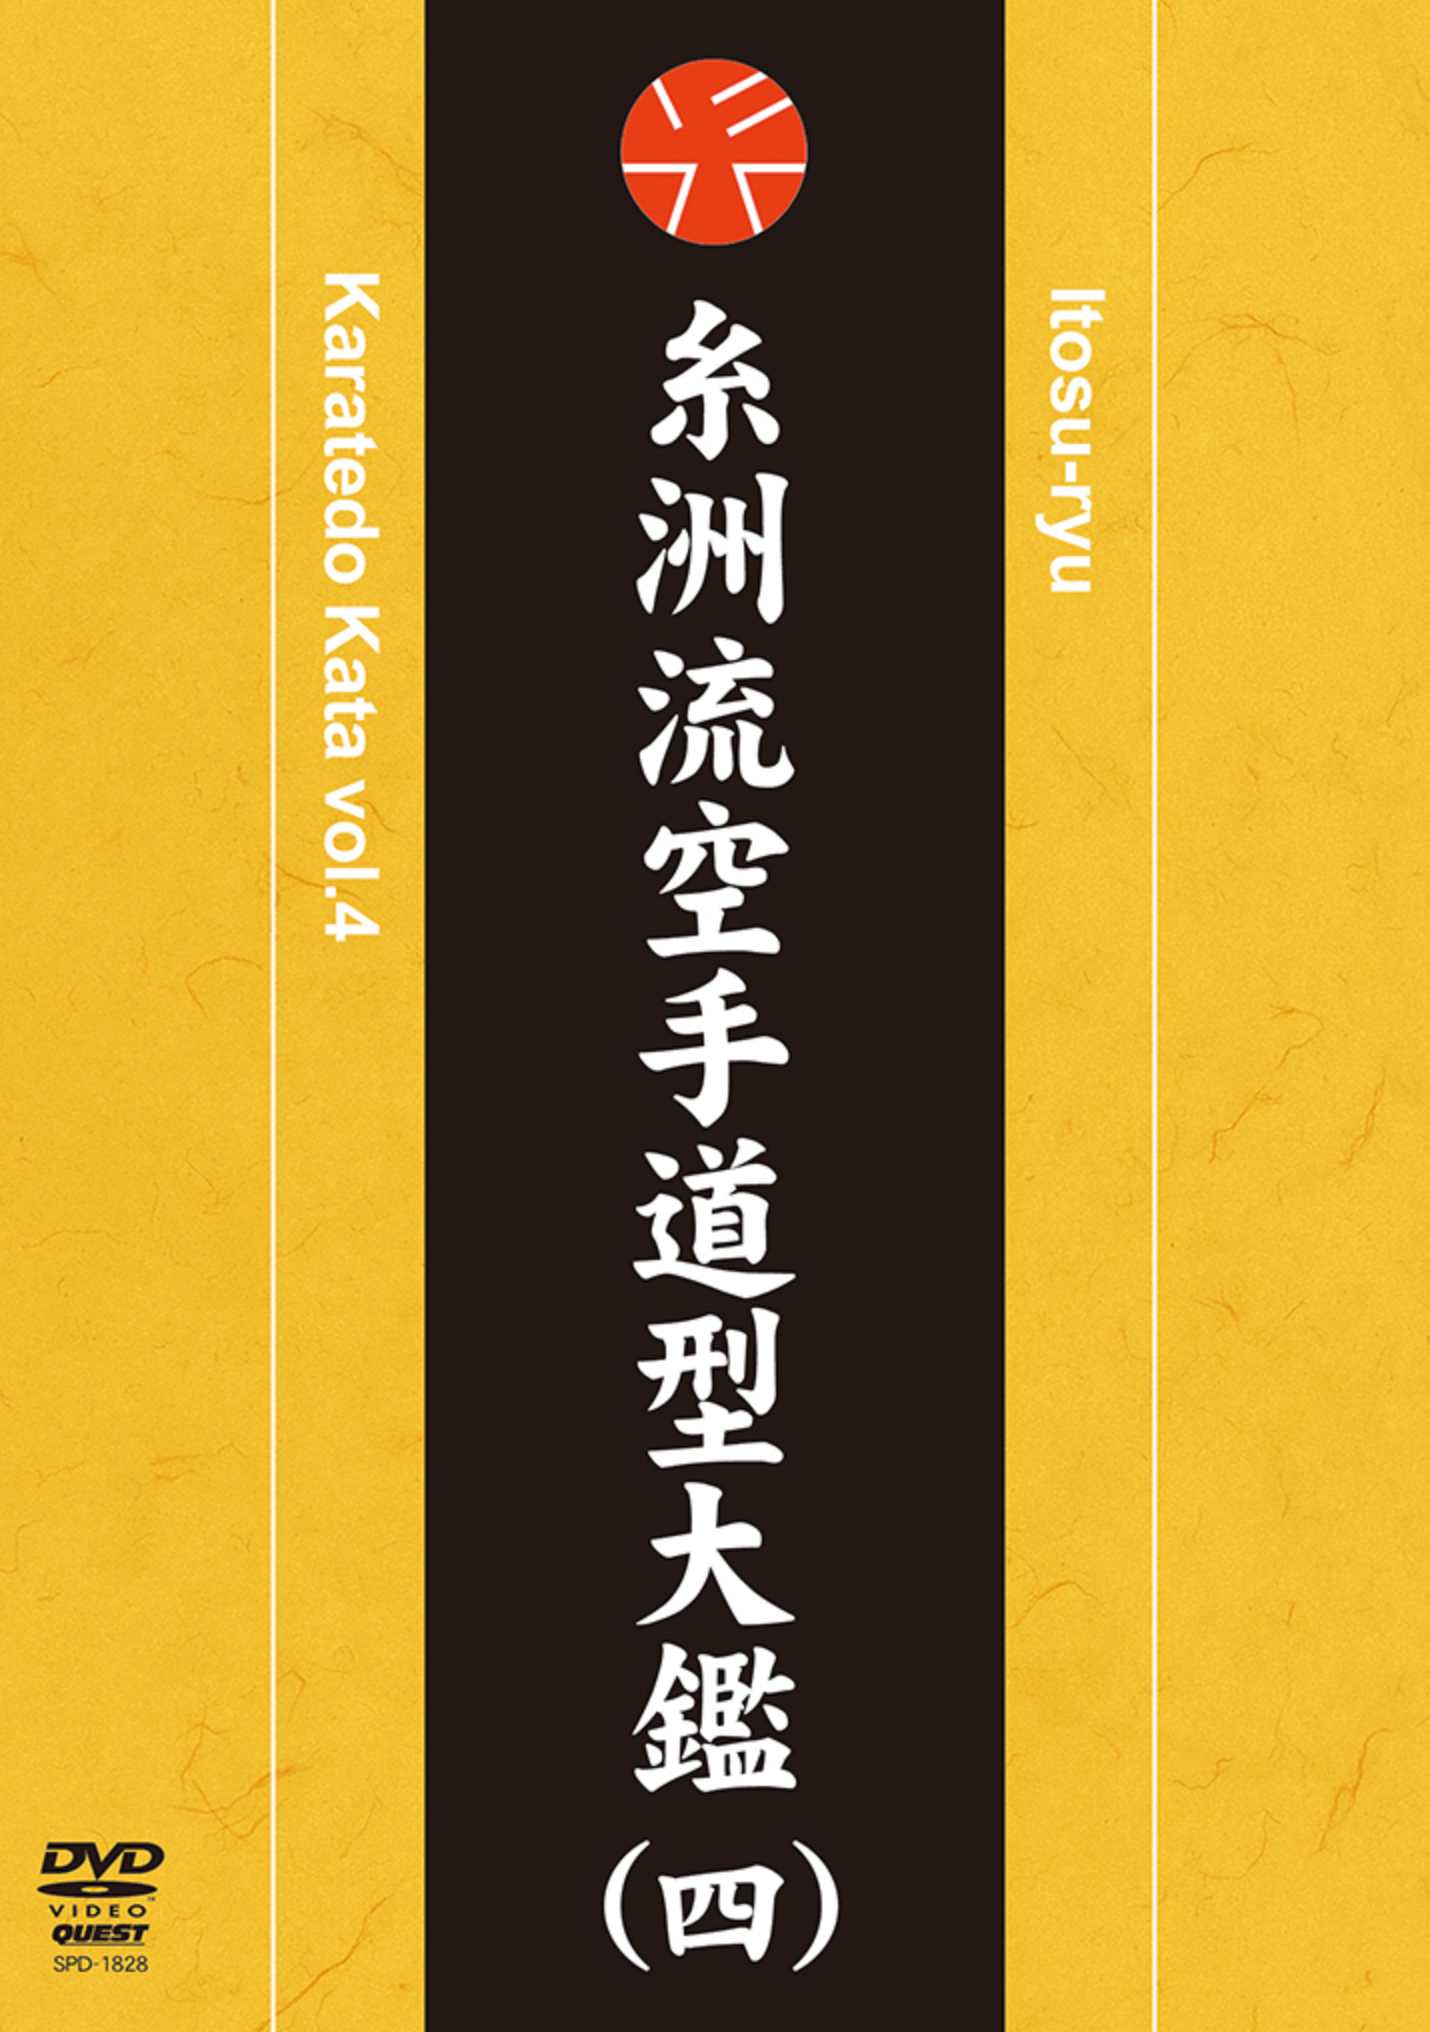 Itosu Ryu Karatedo Kata DVD 4 by Sadaaki Sakagami - Budovideos Inc